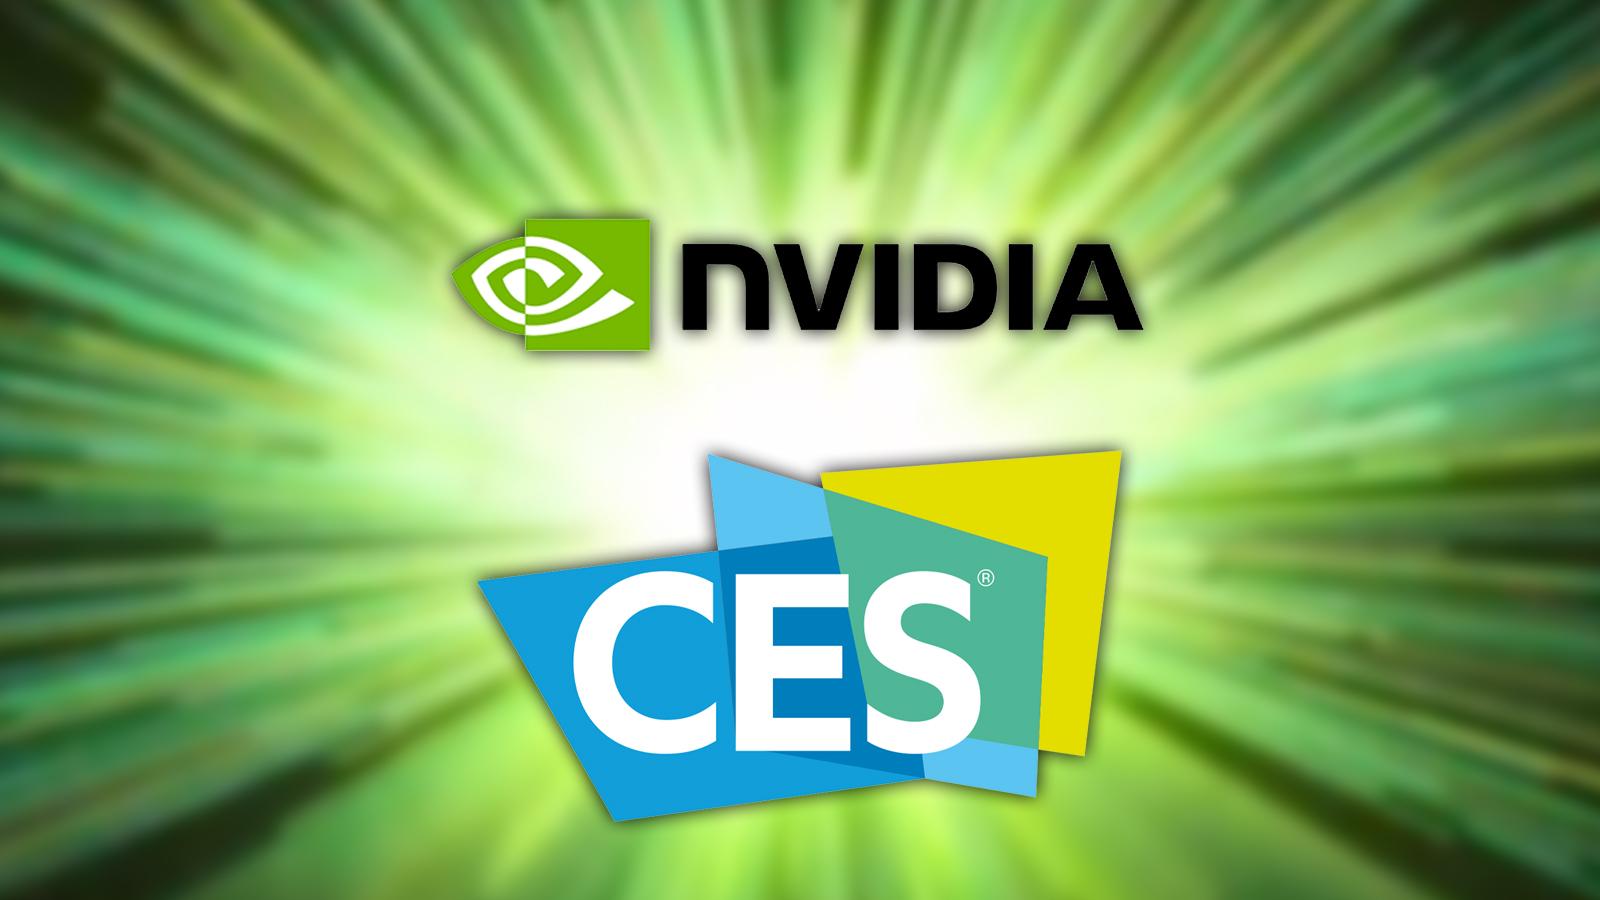 nvidia and ces logos